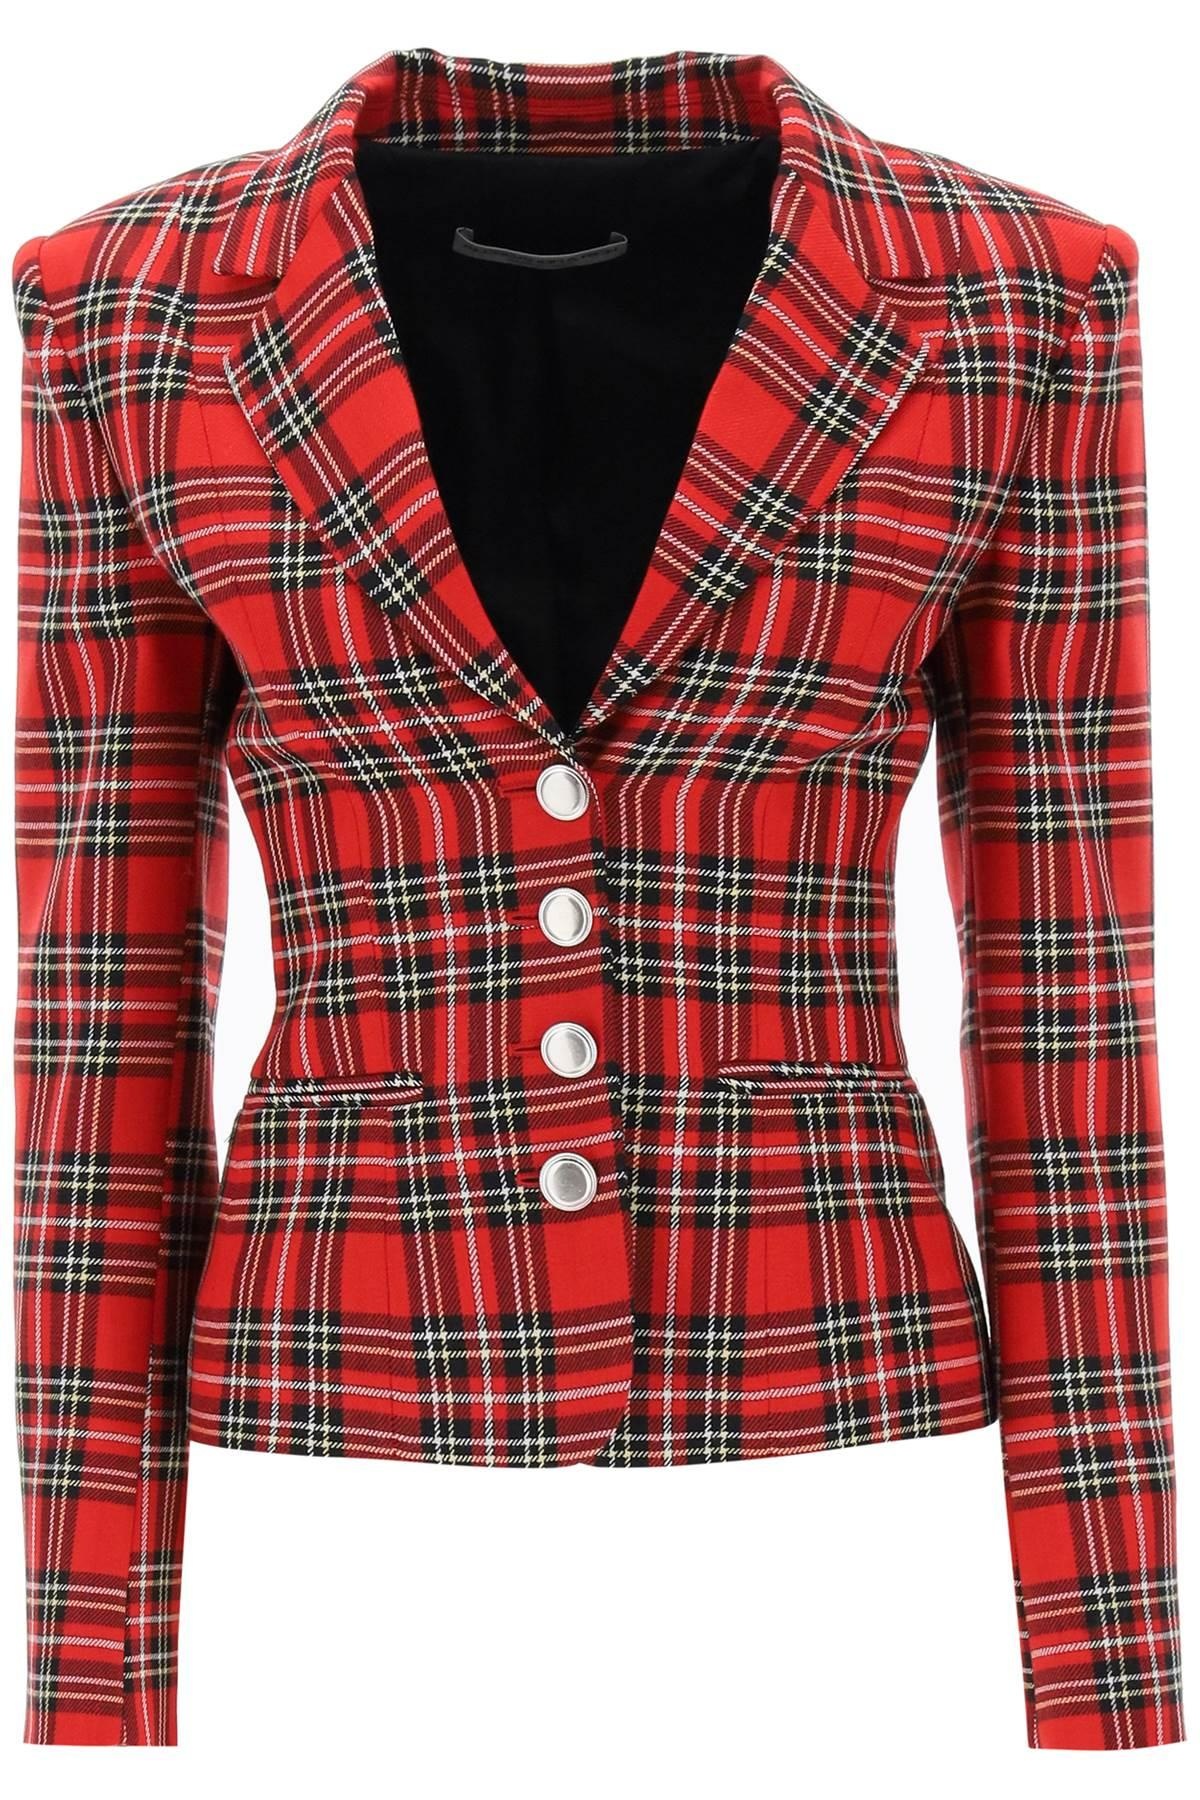 Alessandra Rich Wool Single Breasted Jacket With Tartan Motif - 1